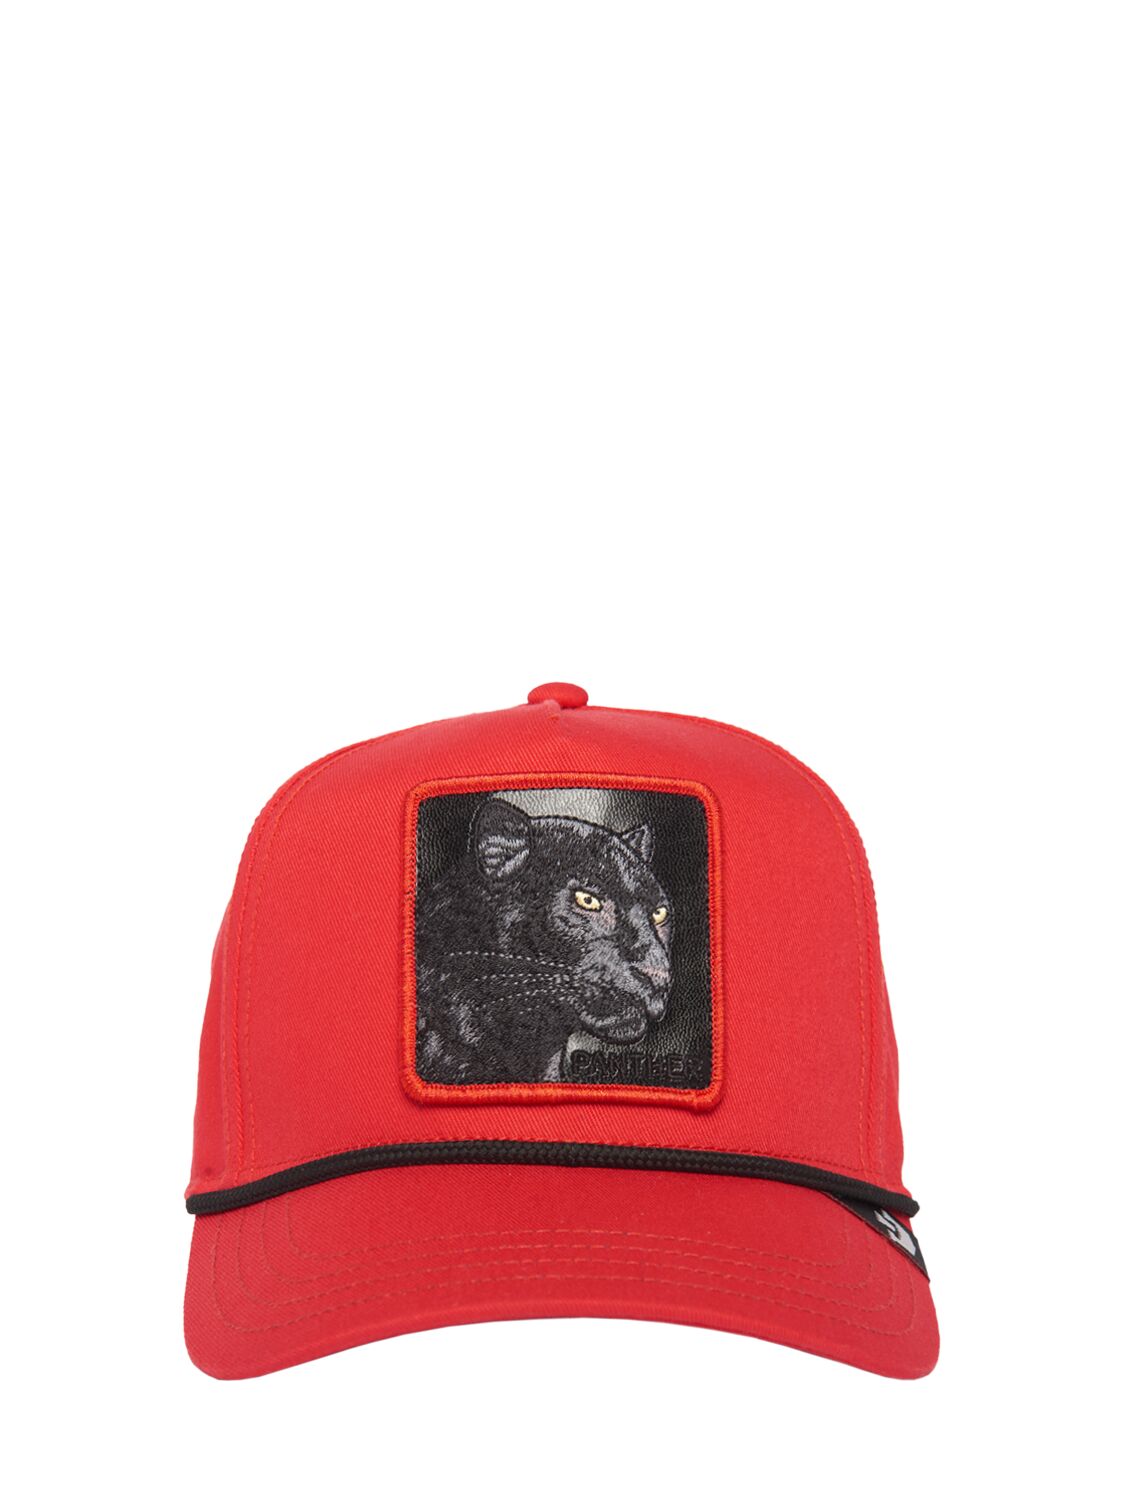 Goorin Bros Panther 100棒球帽 In Red,black